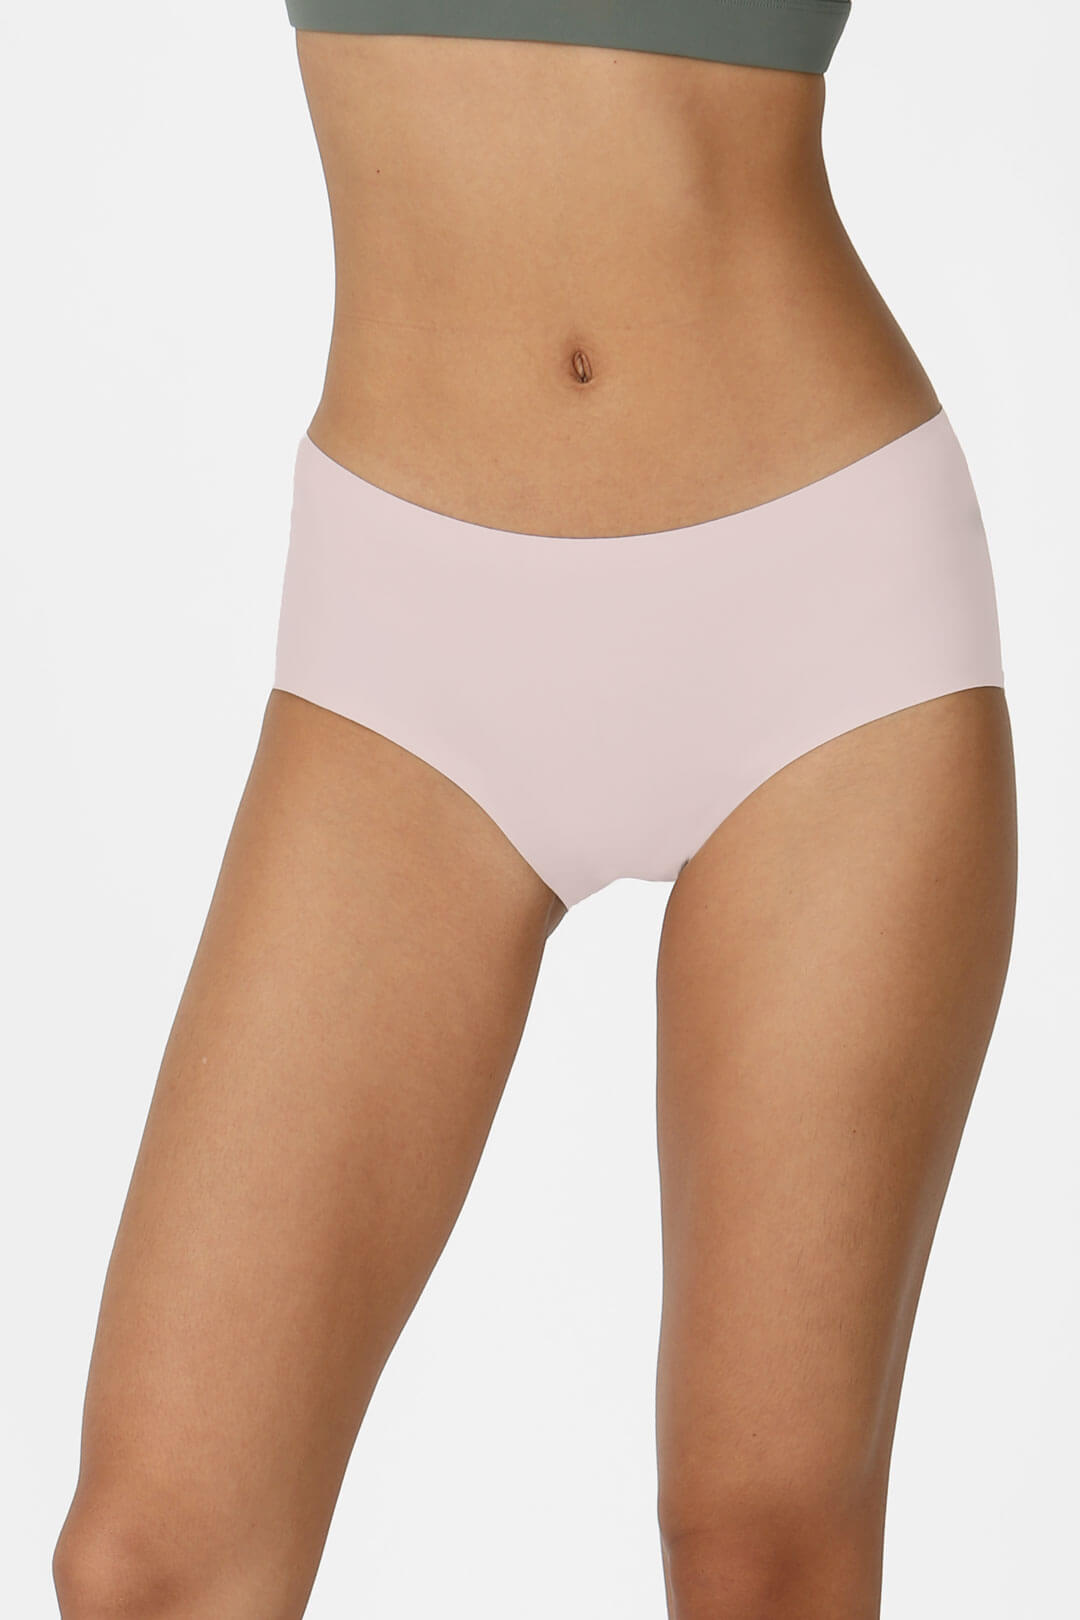 Lot 4 Caterlove Women's Seamless Underwear Panties Hipster Bikini  Small/Medium